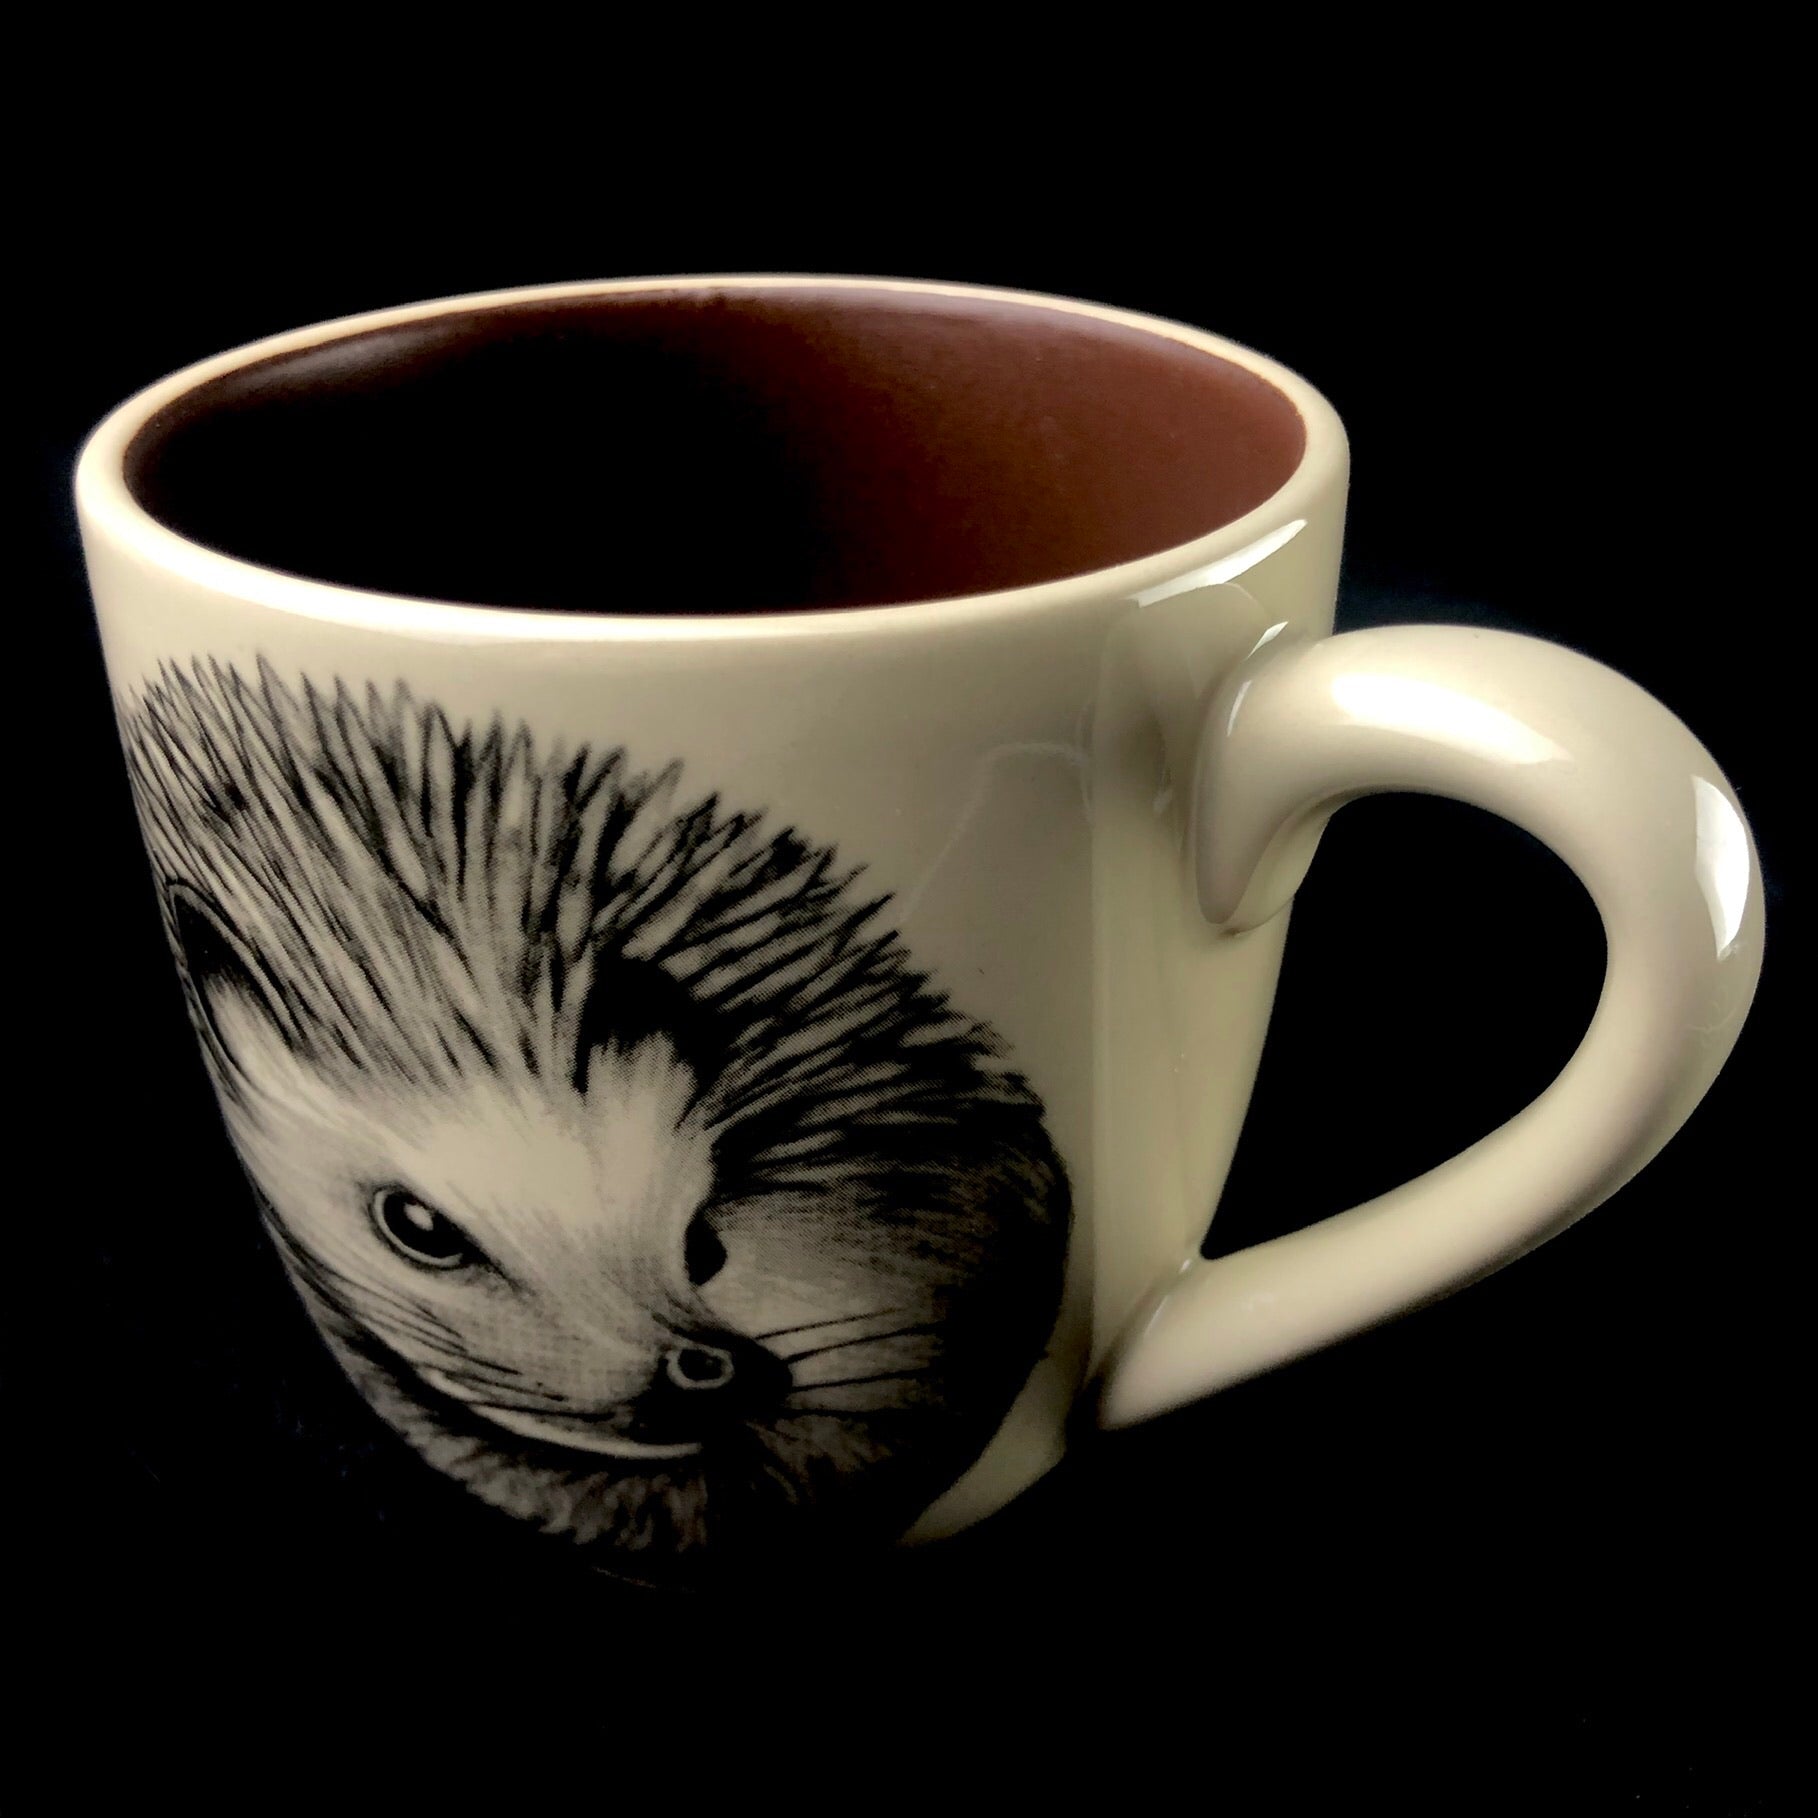 Top view of Hedgehog Mug with brown interior